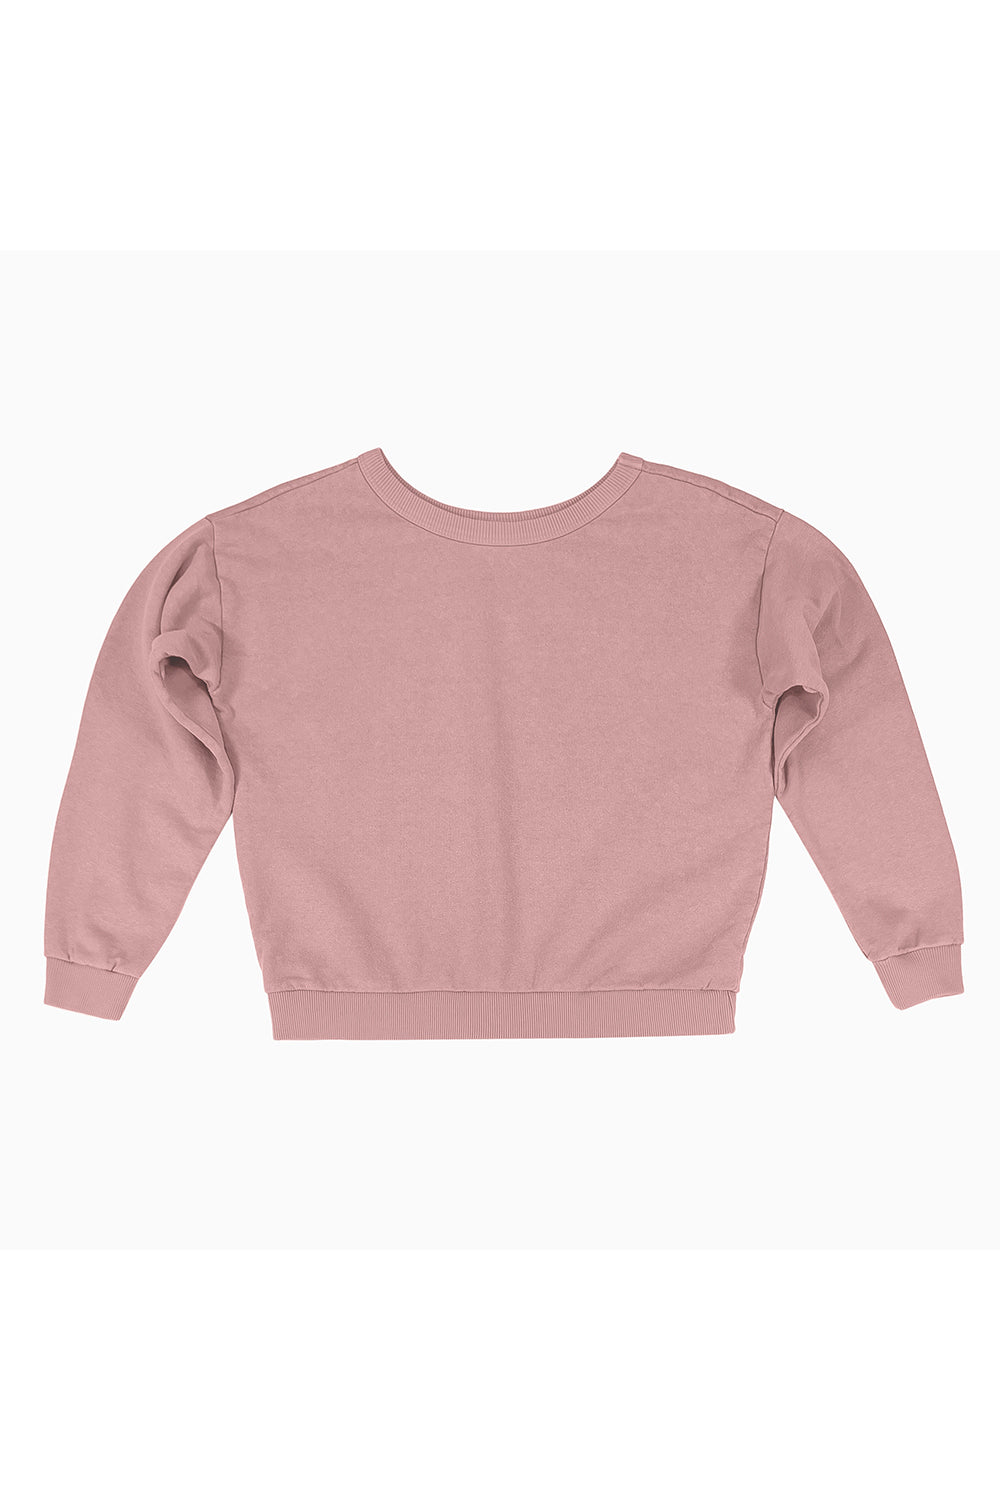 Laguna Cropped Sweatshirt | Jungmaven Hemp Clothing & Accessories / Color: Rose Quartz